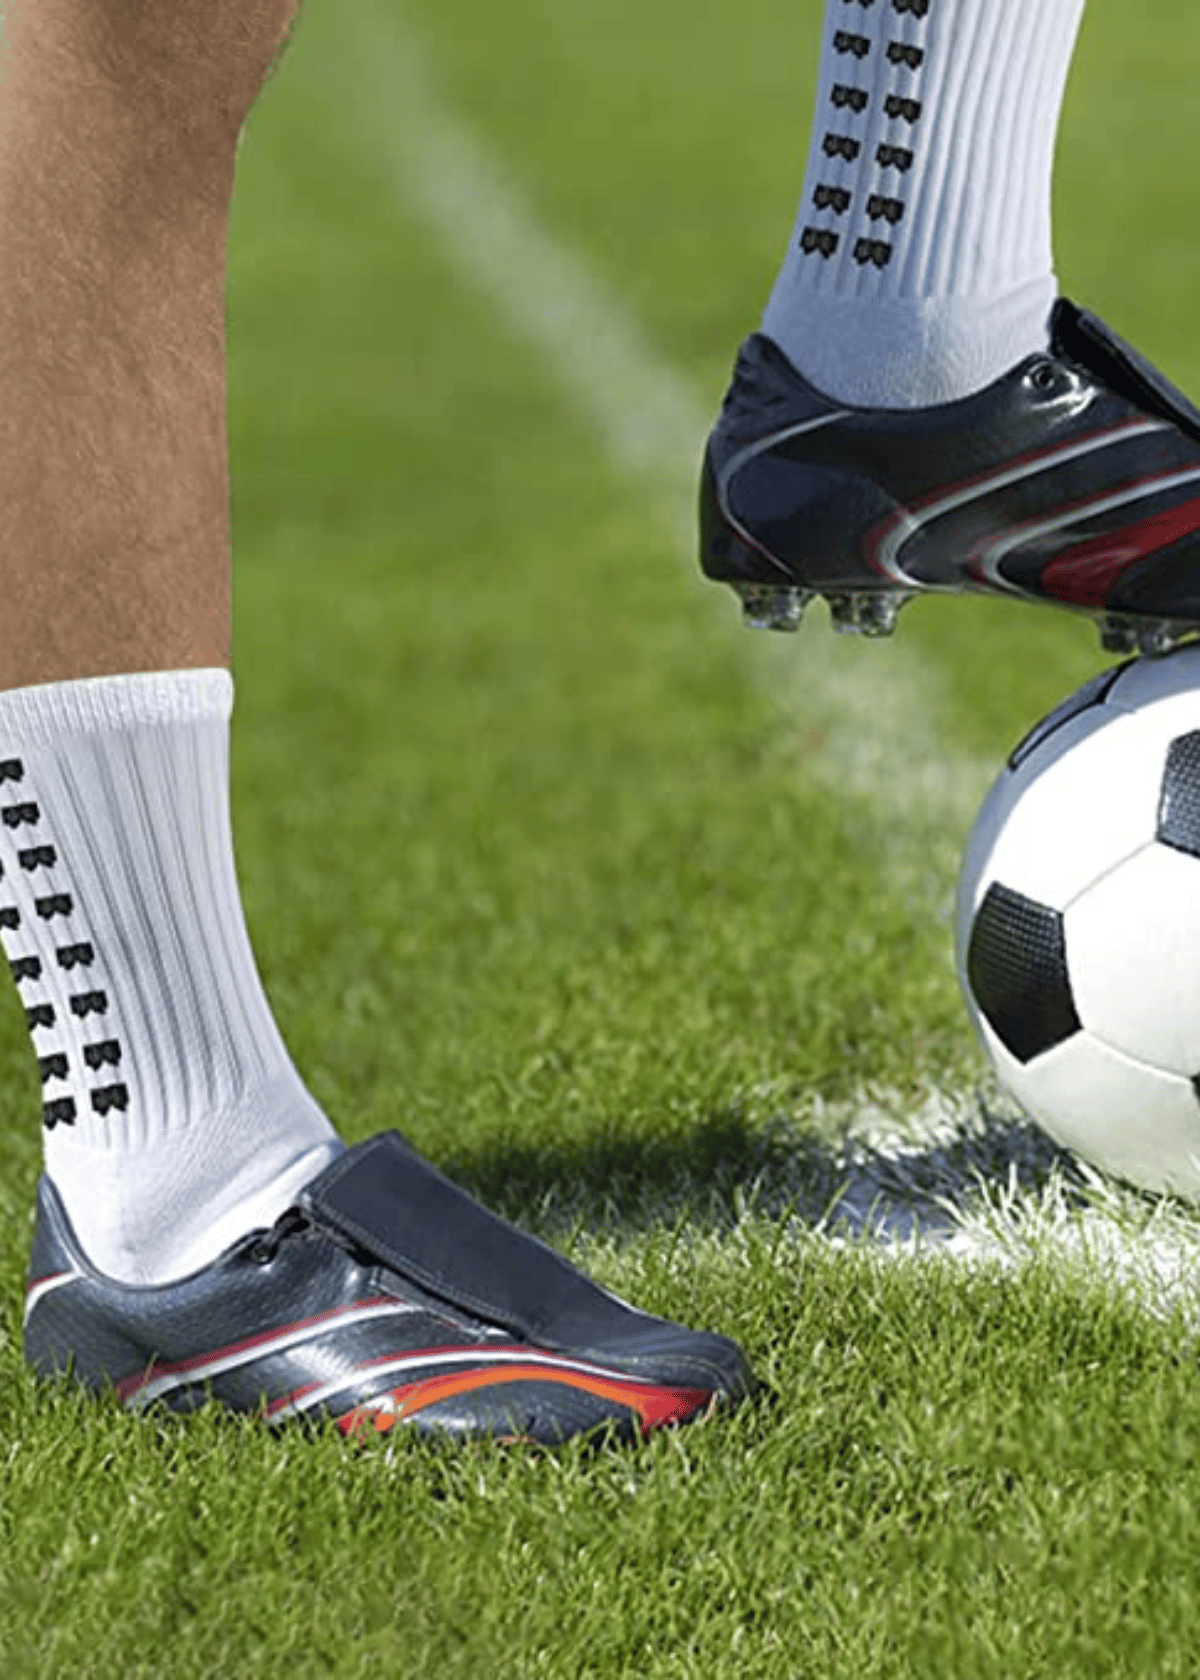 Grip Socks Soccer: A Guide to Buying the Best Soccer Socks